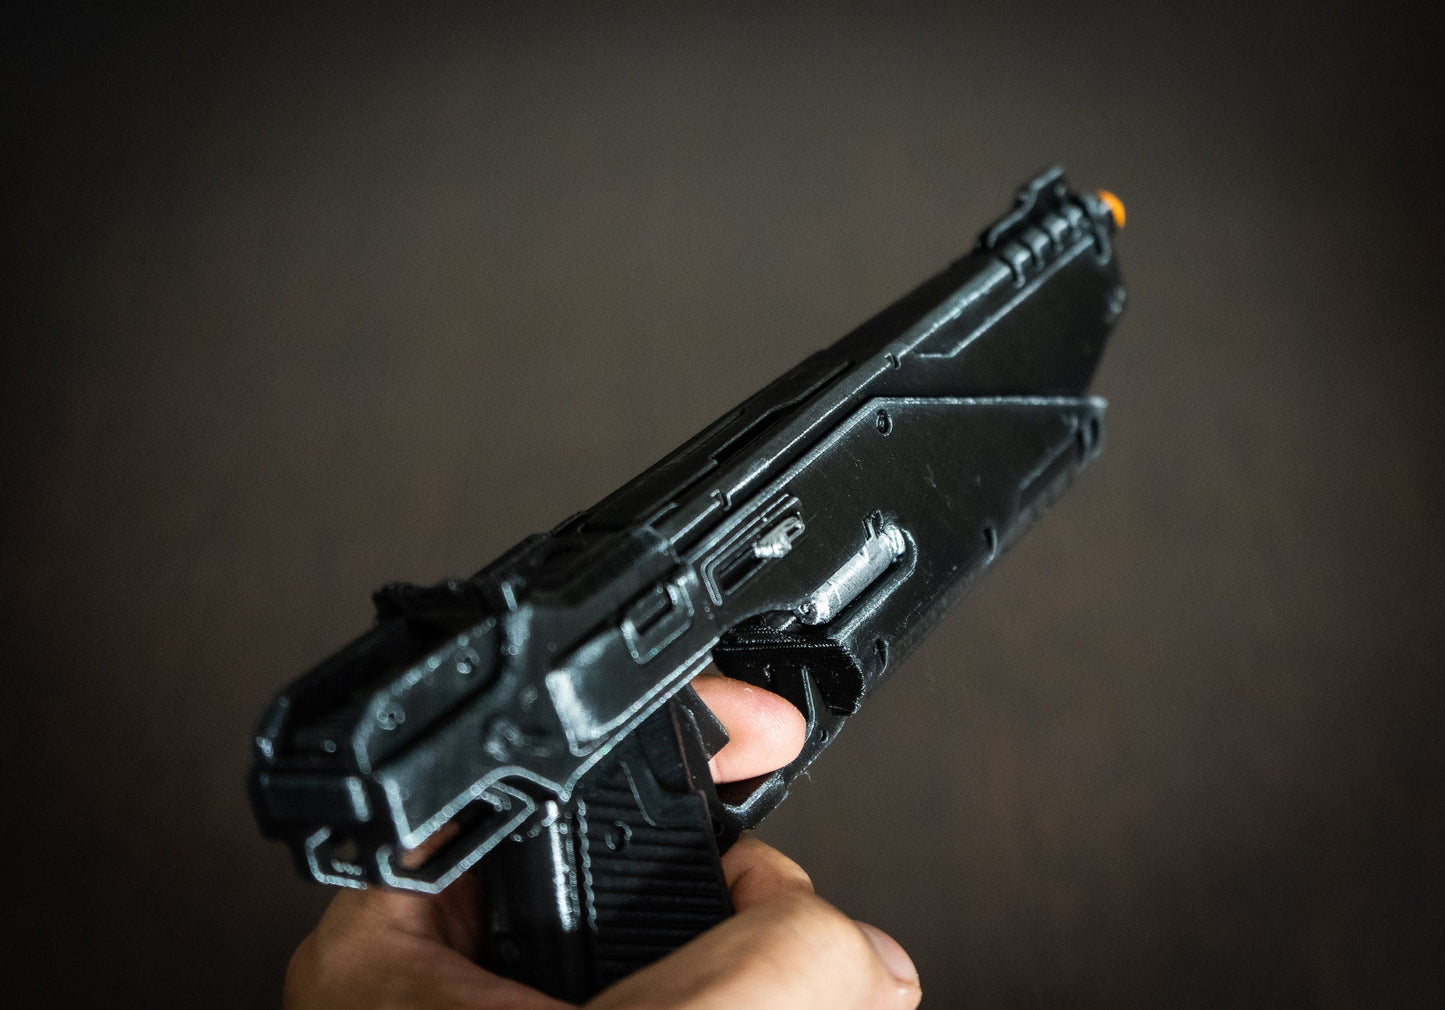 Westar 35 blaster pistol with leather holster | Star Wars Replica gun | Star Wars Props | Star Wars Cosplay - 3DPrintProps